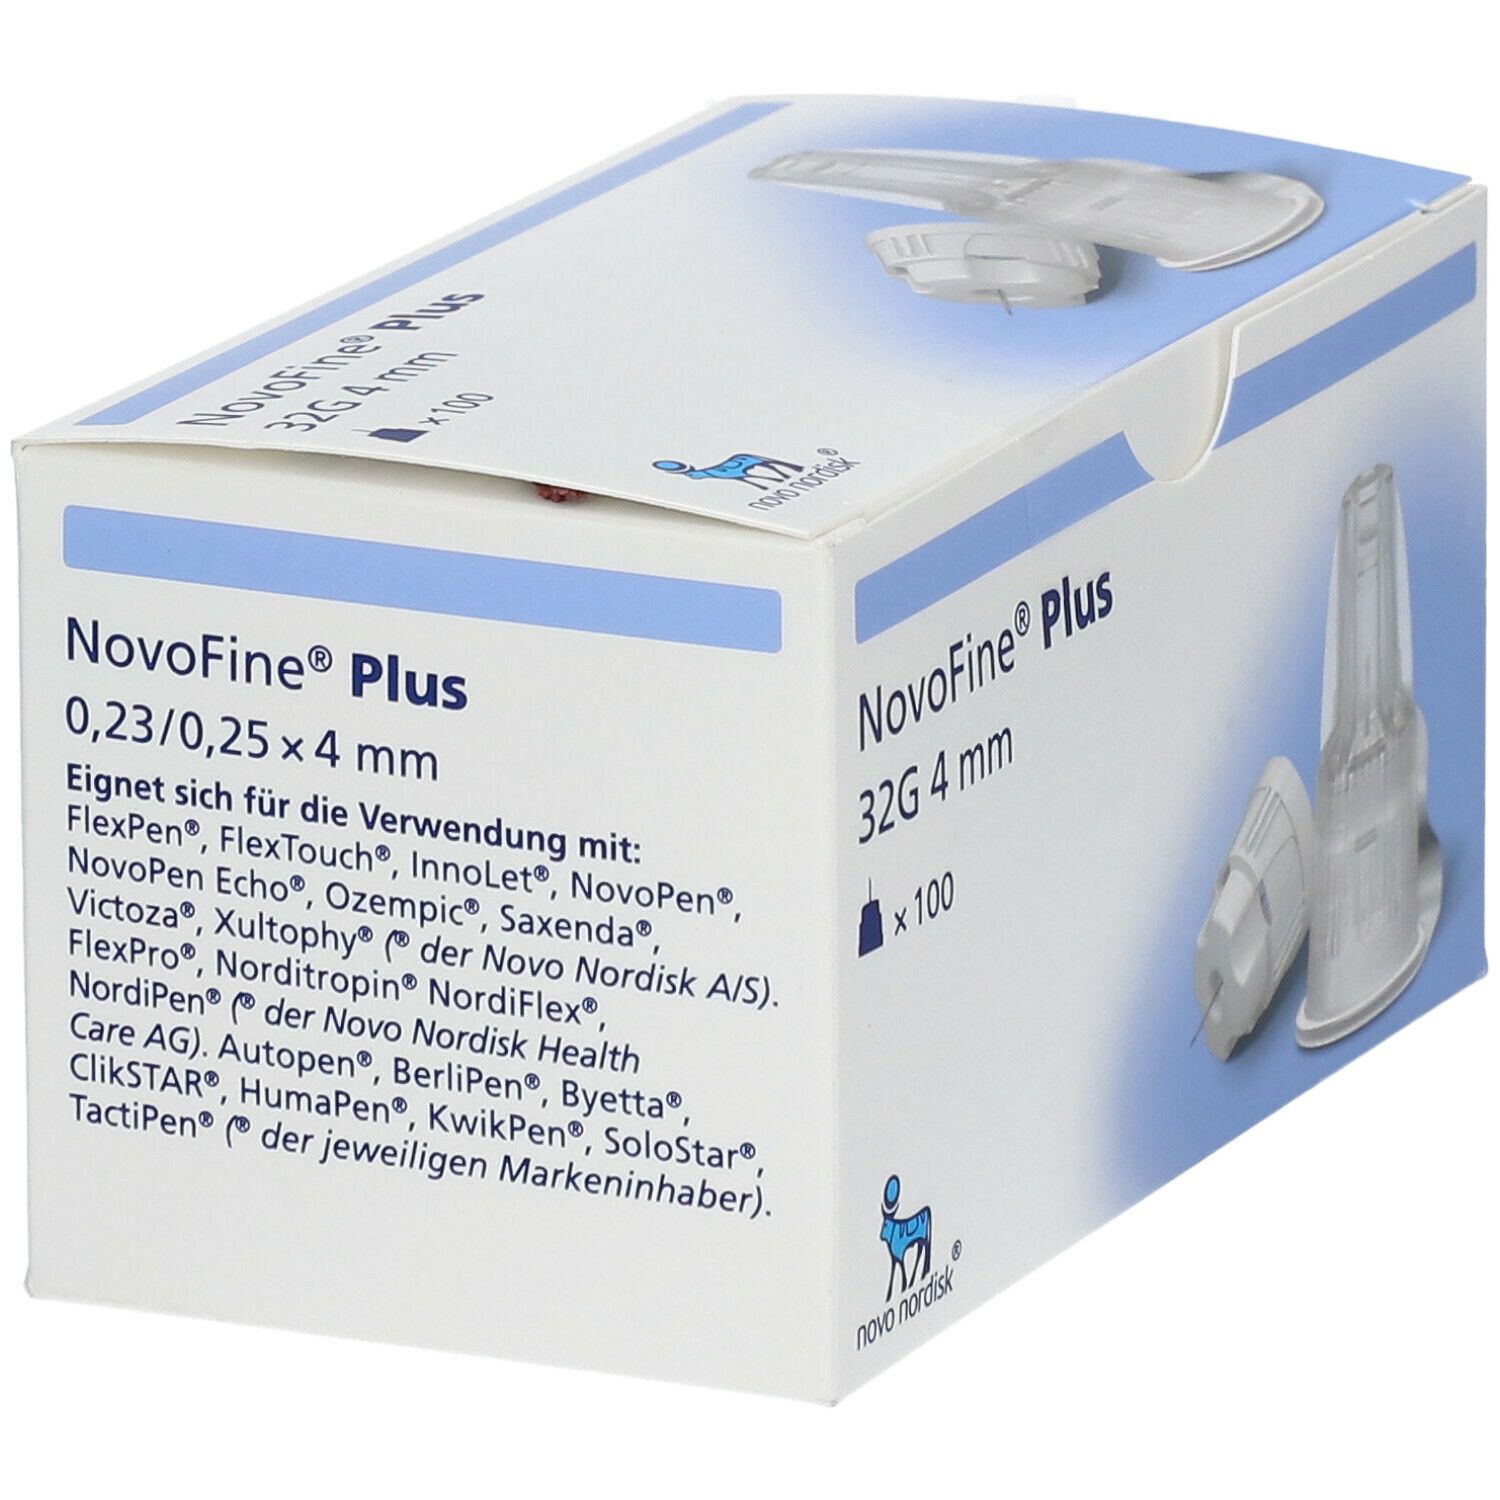 Buy online Novofine Plus Injektionsnadeln 4mm 32g 100 Stück at SWISS TABLETS